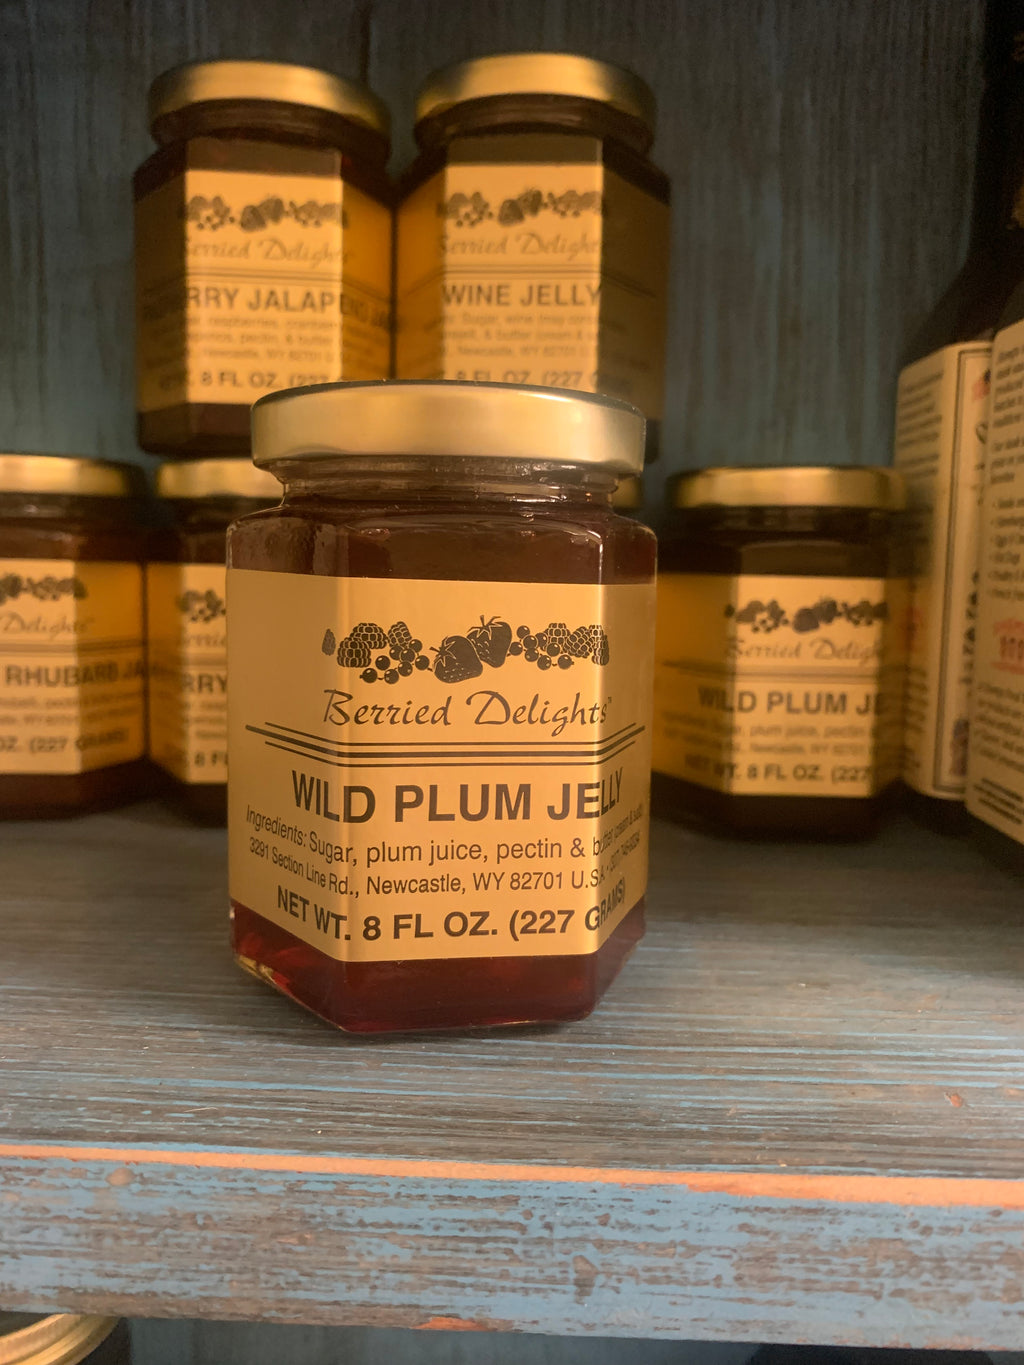 BERRIED DELIGHTS: Wild Plum Jelly